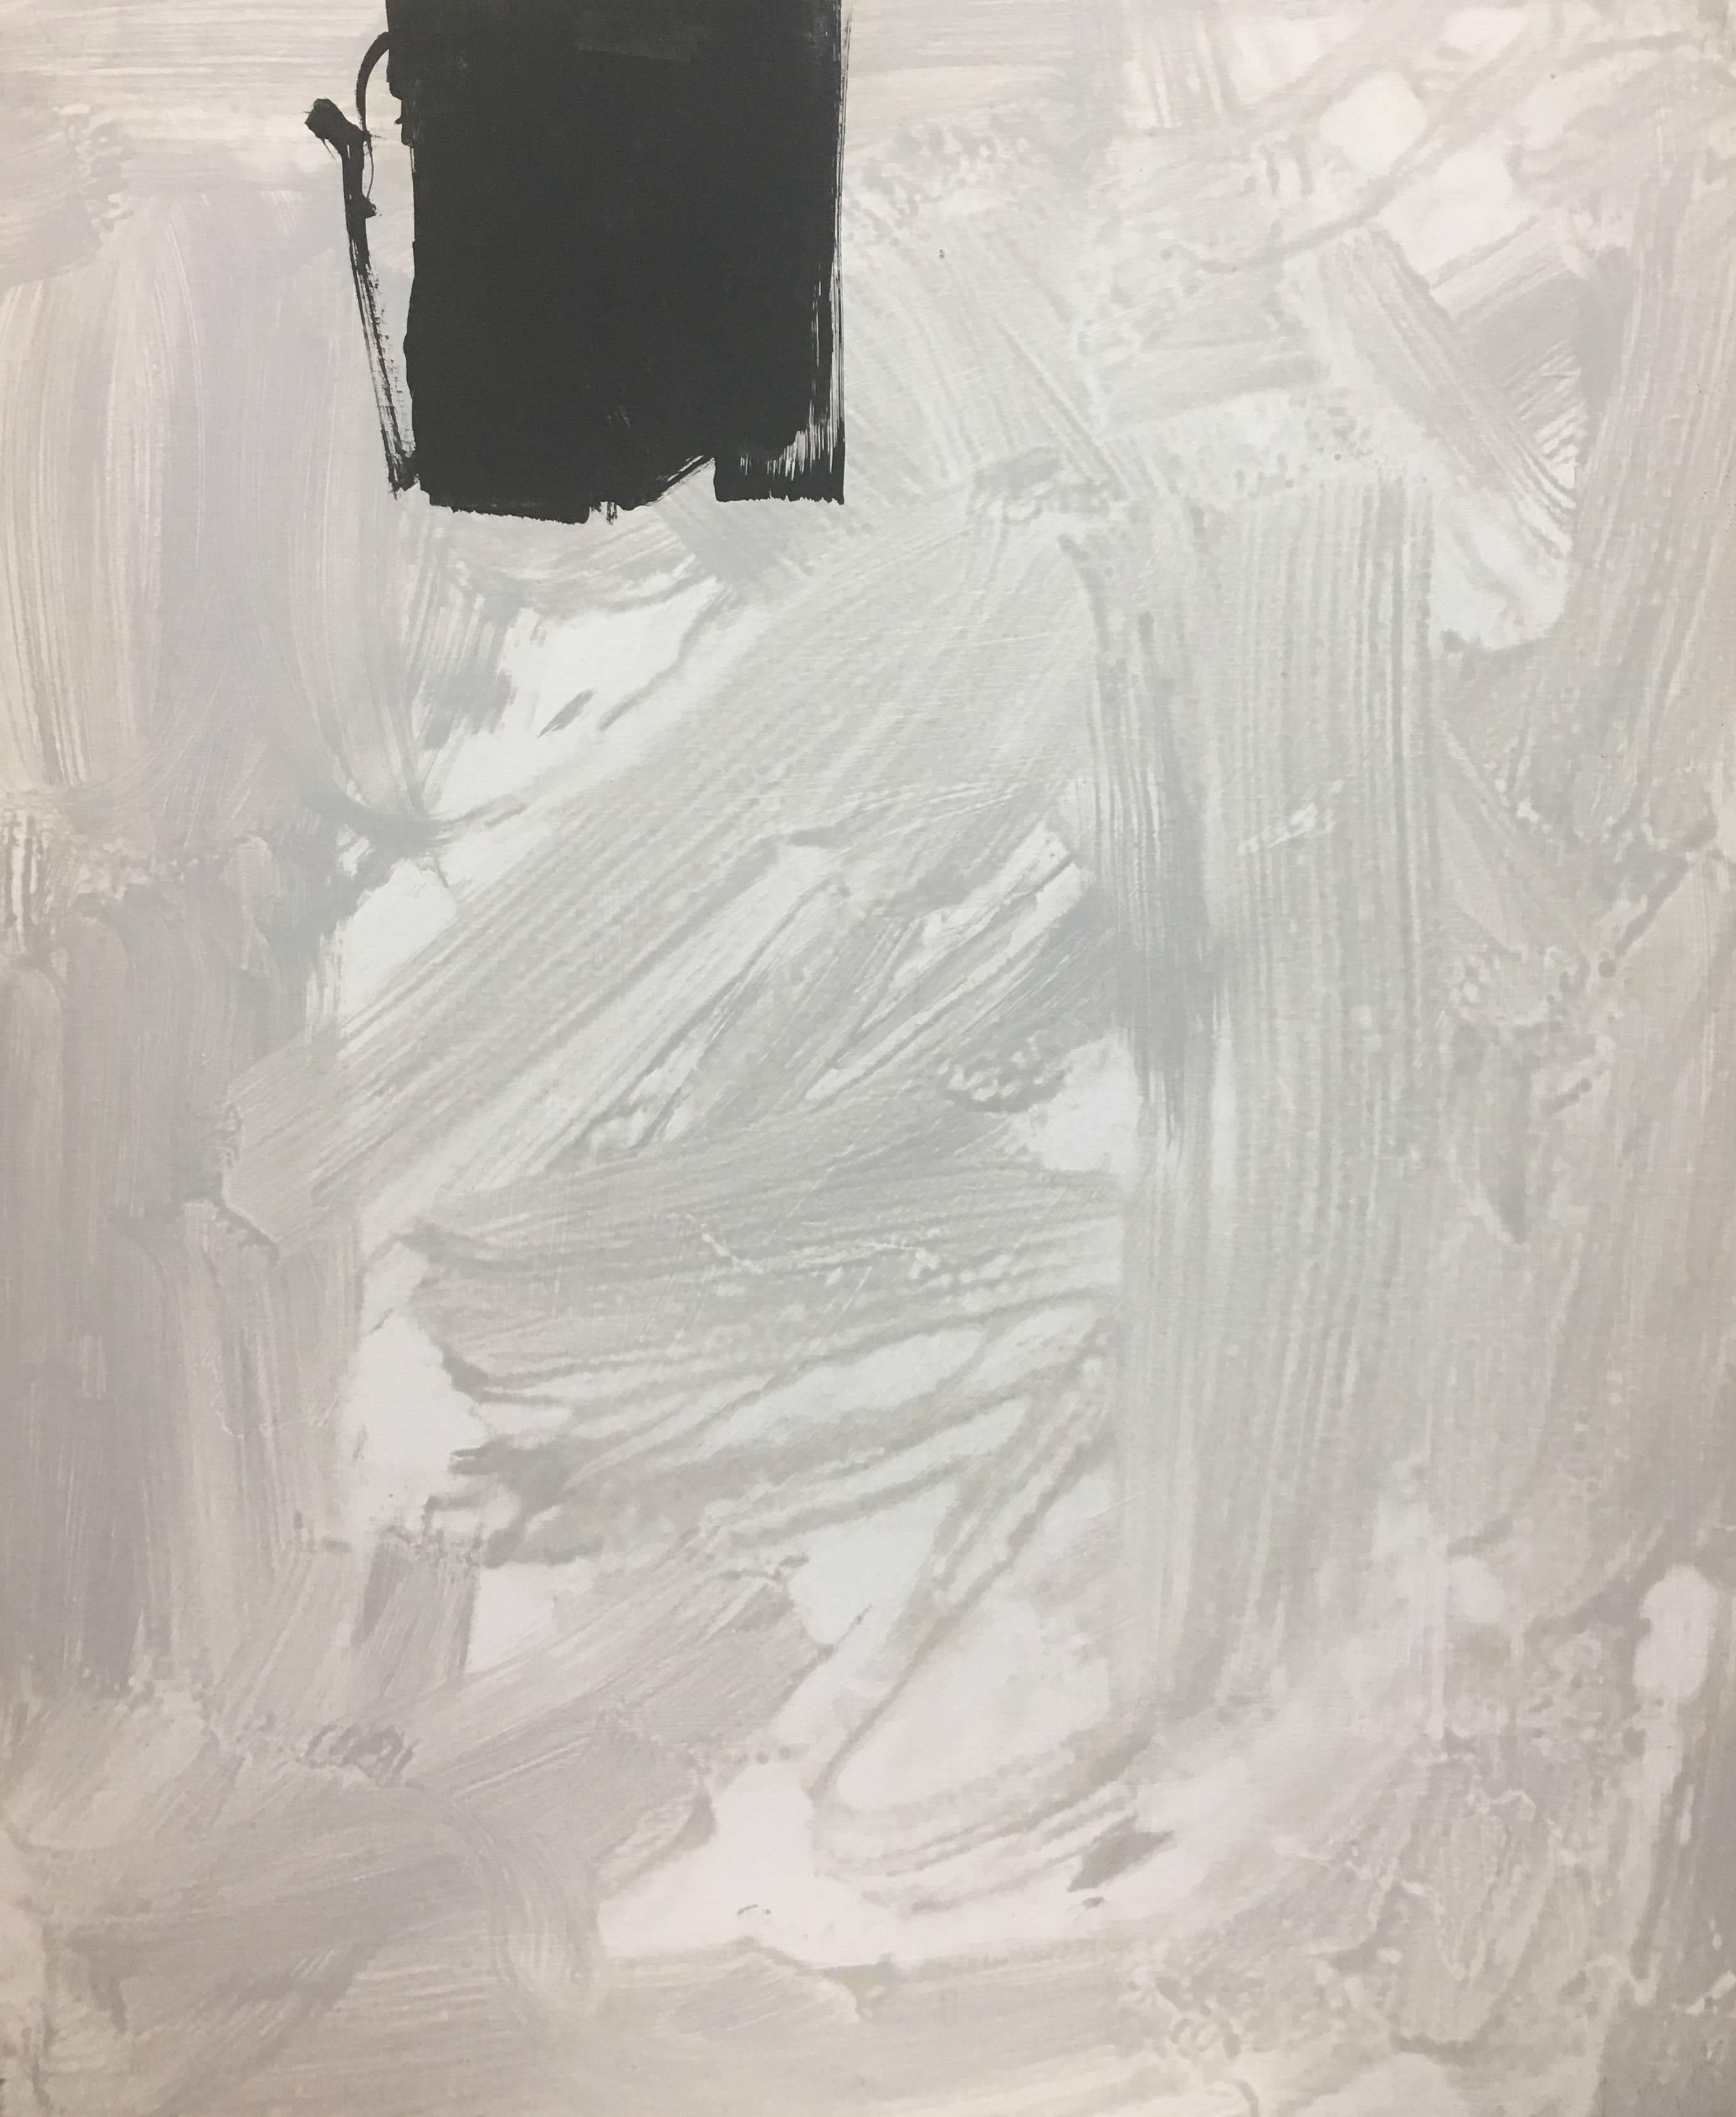 RAFAEL RUZ Abstract Painting - Ruz   Grey  Black  Vertical  original abstract acrylic painting